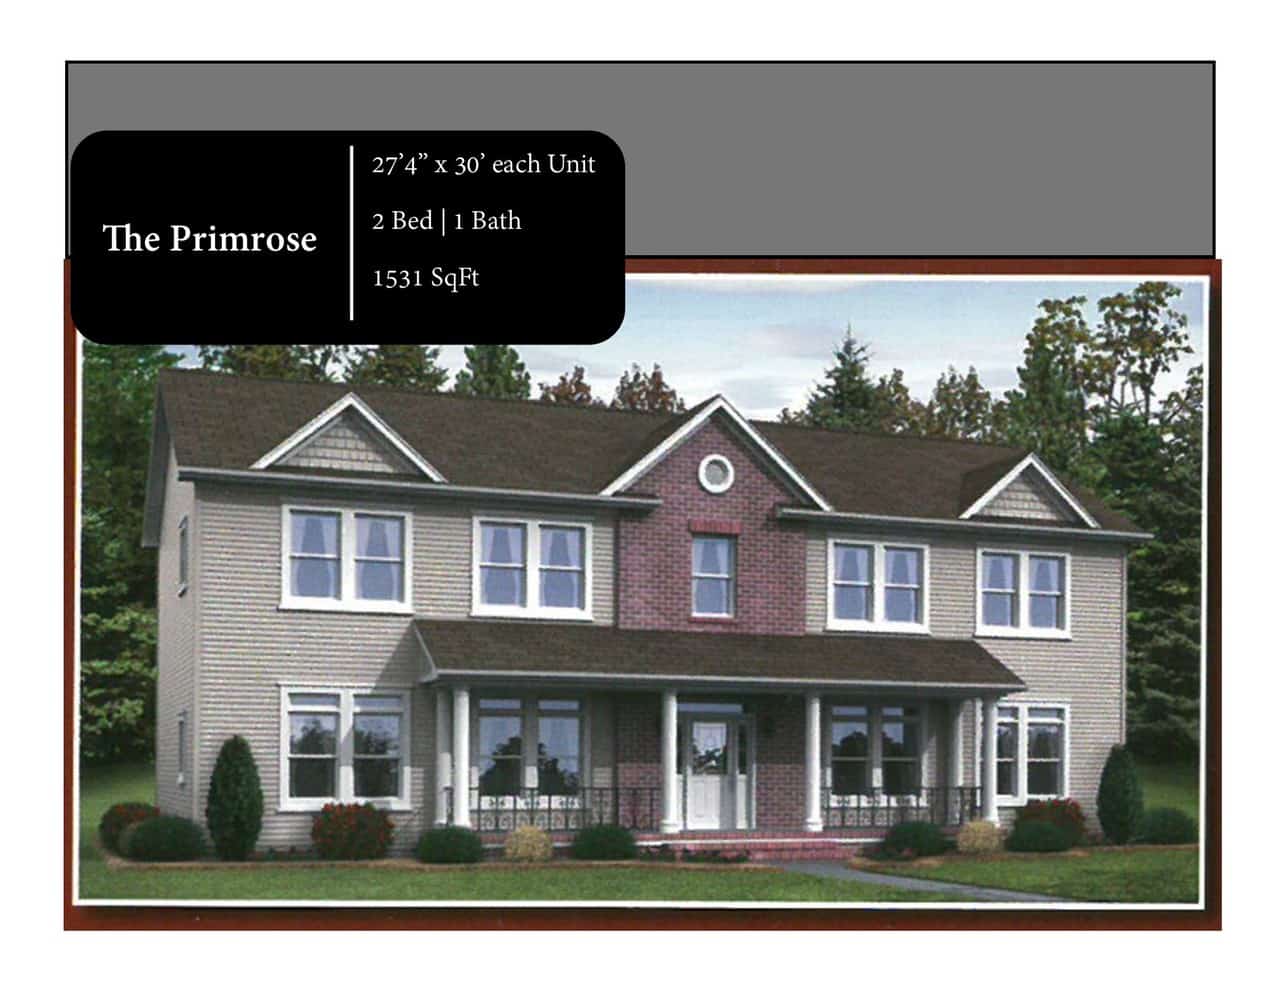 modular homes - The Primrose